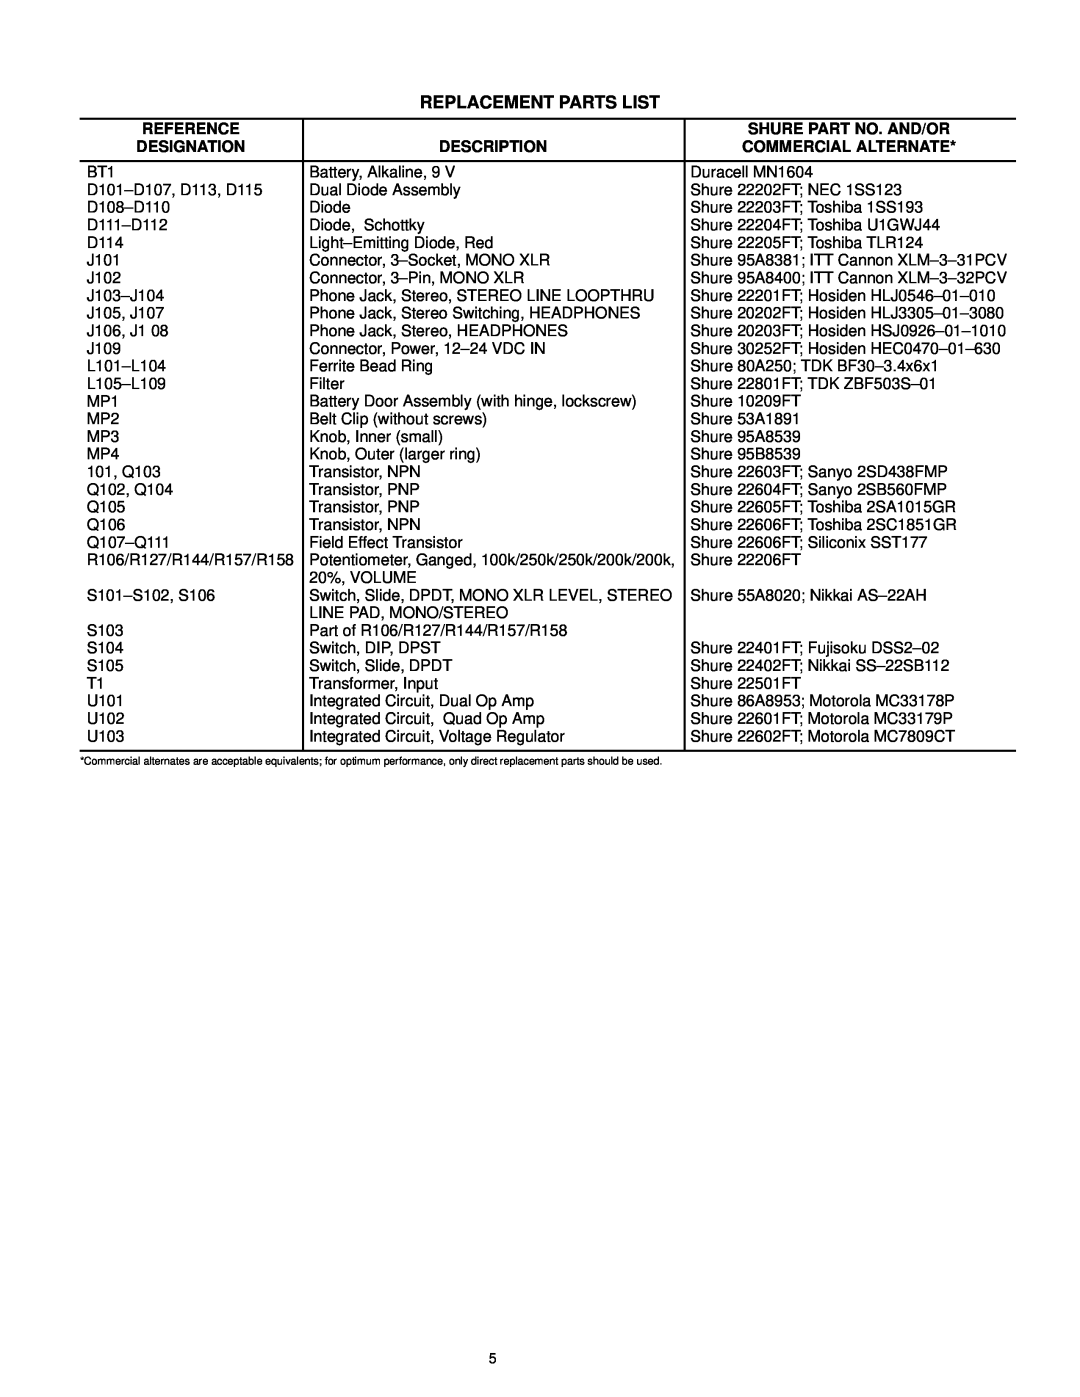 Shure FP22 Replacement Parts List, Reference, Description, Shure Part No. And/Or, Designation, Commercial Alternate 